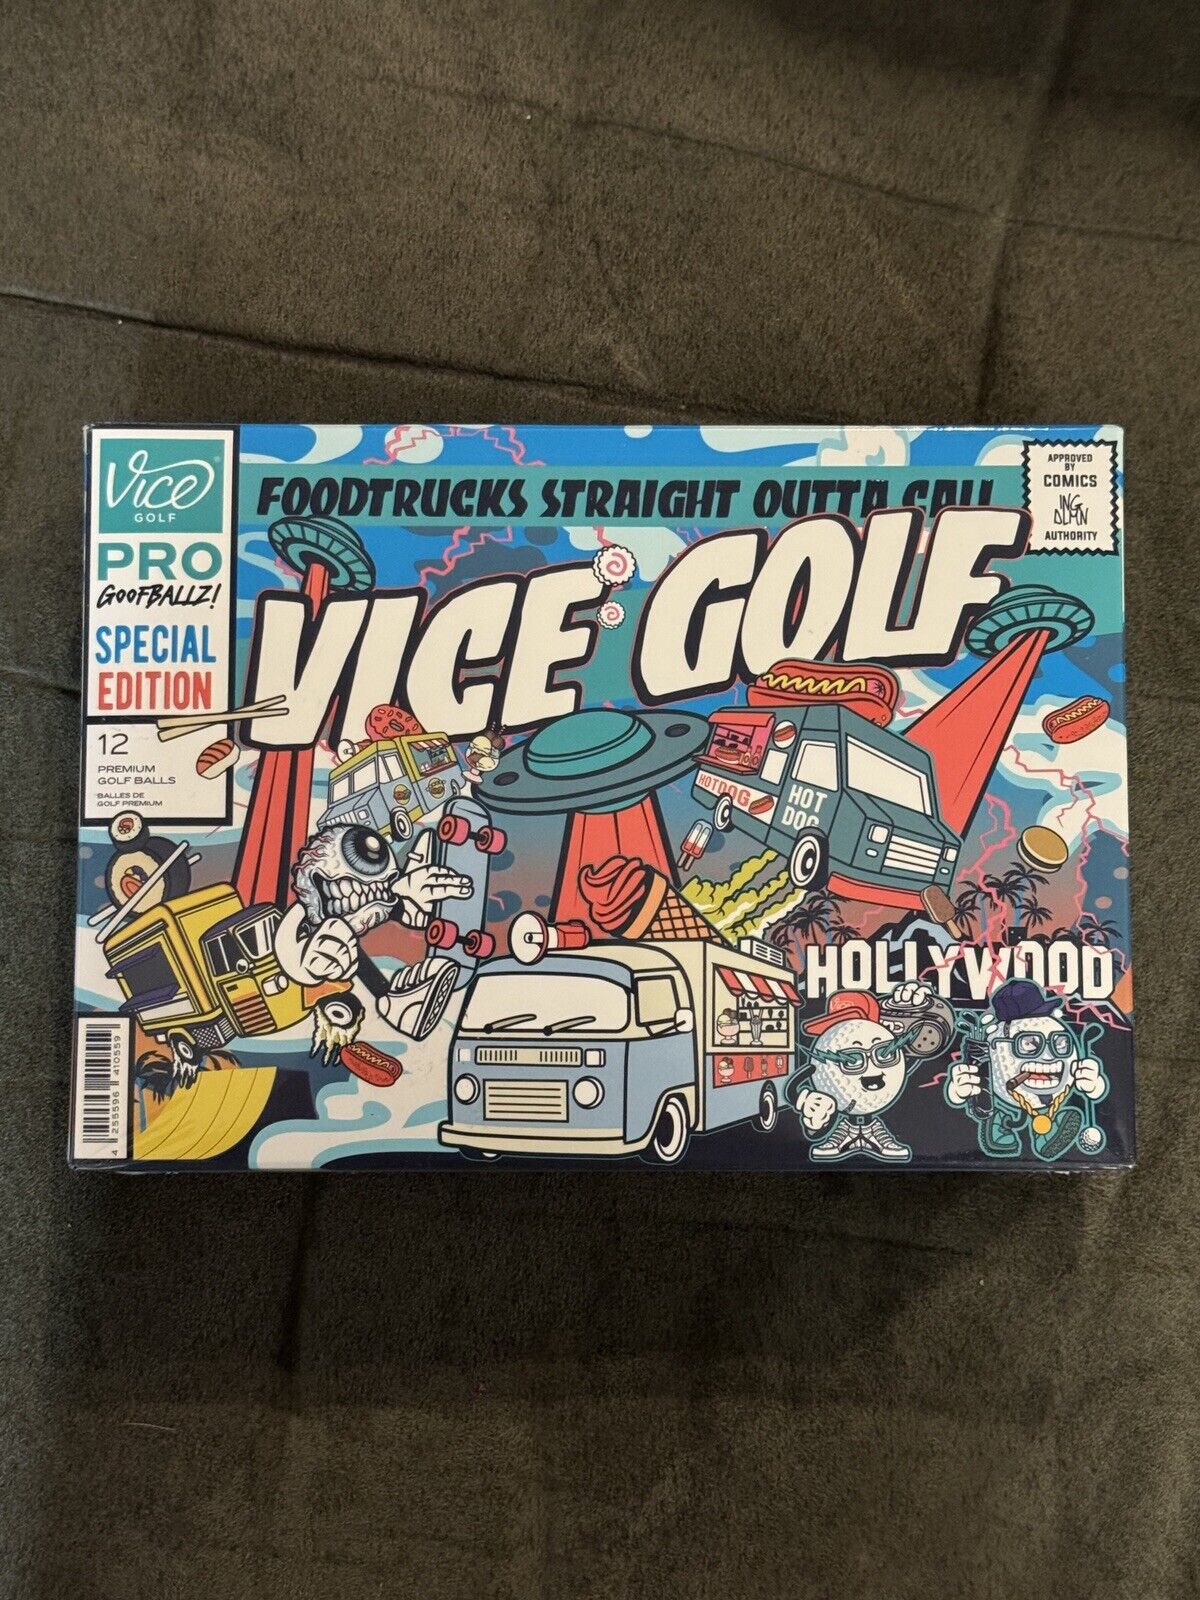 Vice Golf Balls. Goofballz Special Edition